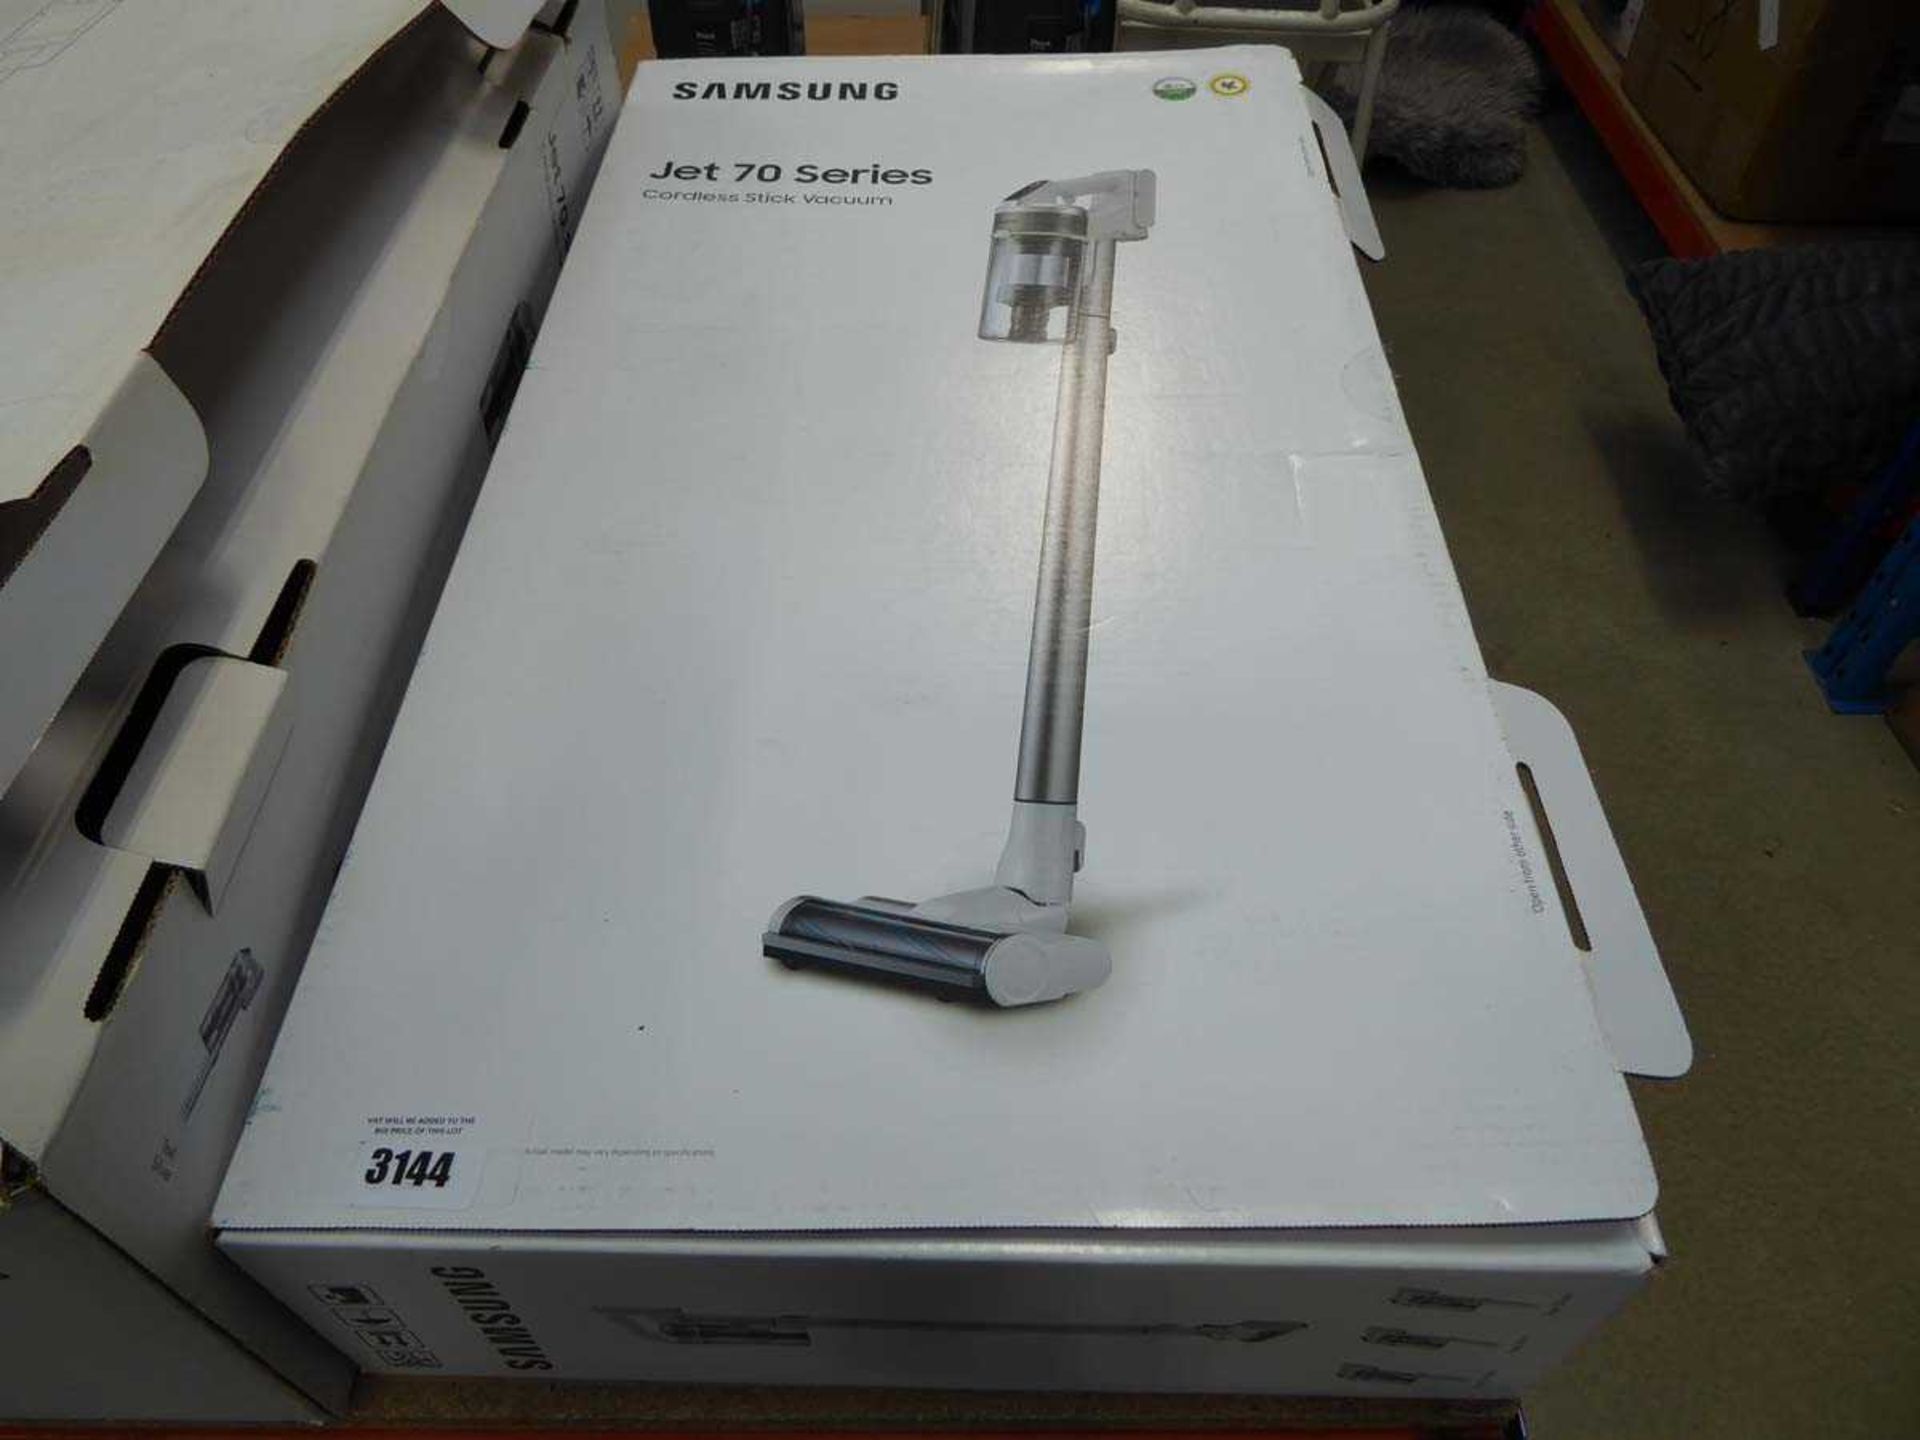 +VAT Samsung Jet 70 Series cordless stick vacuum cleaner